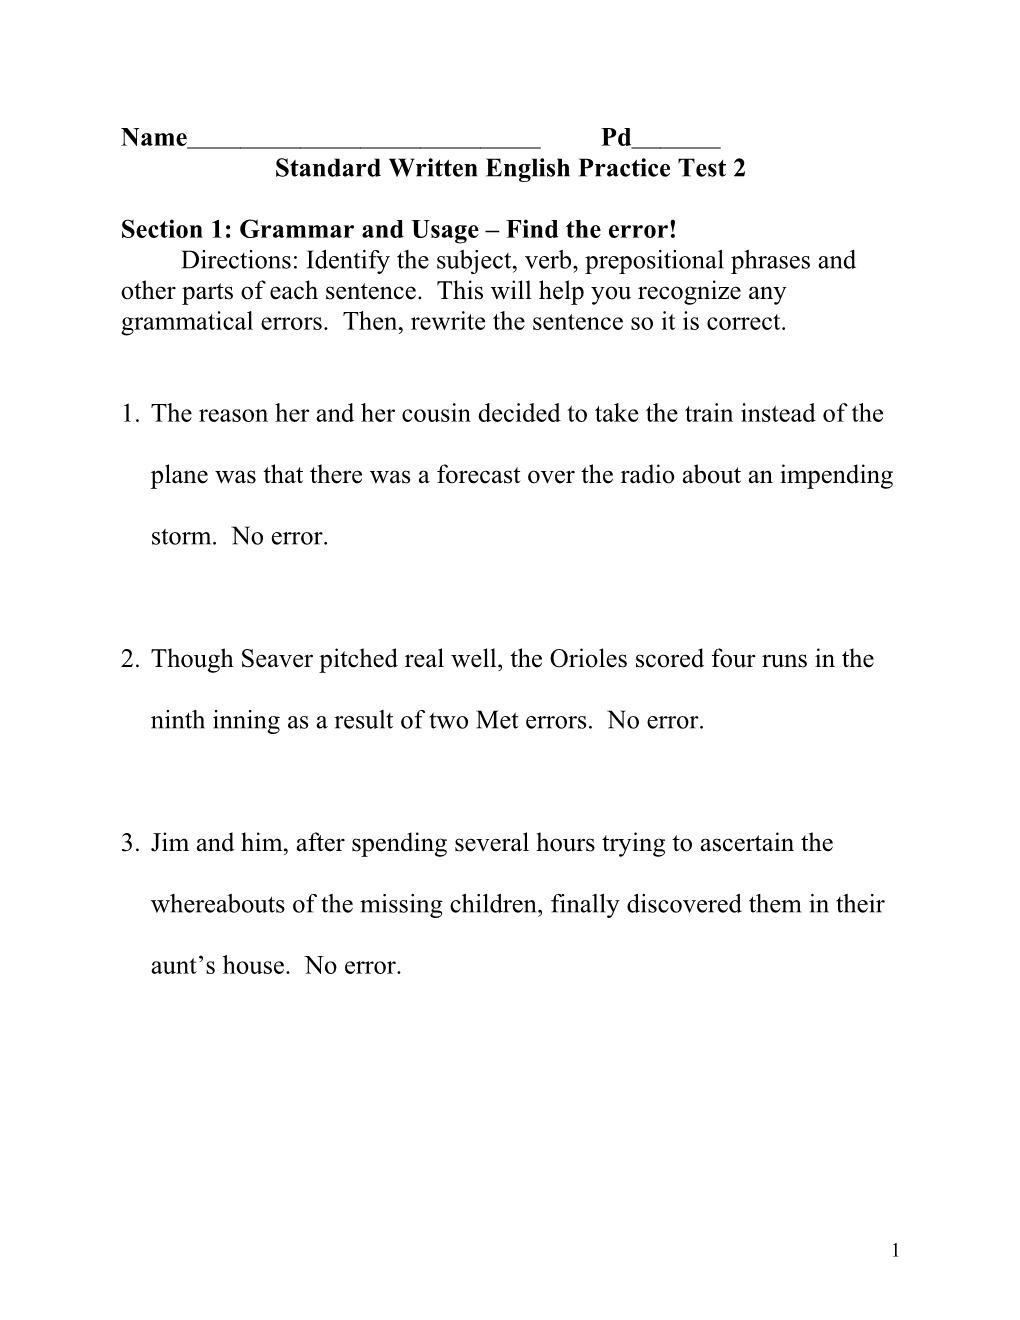 Standard Written English Practice Test 2